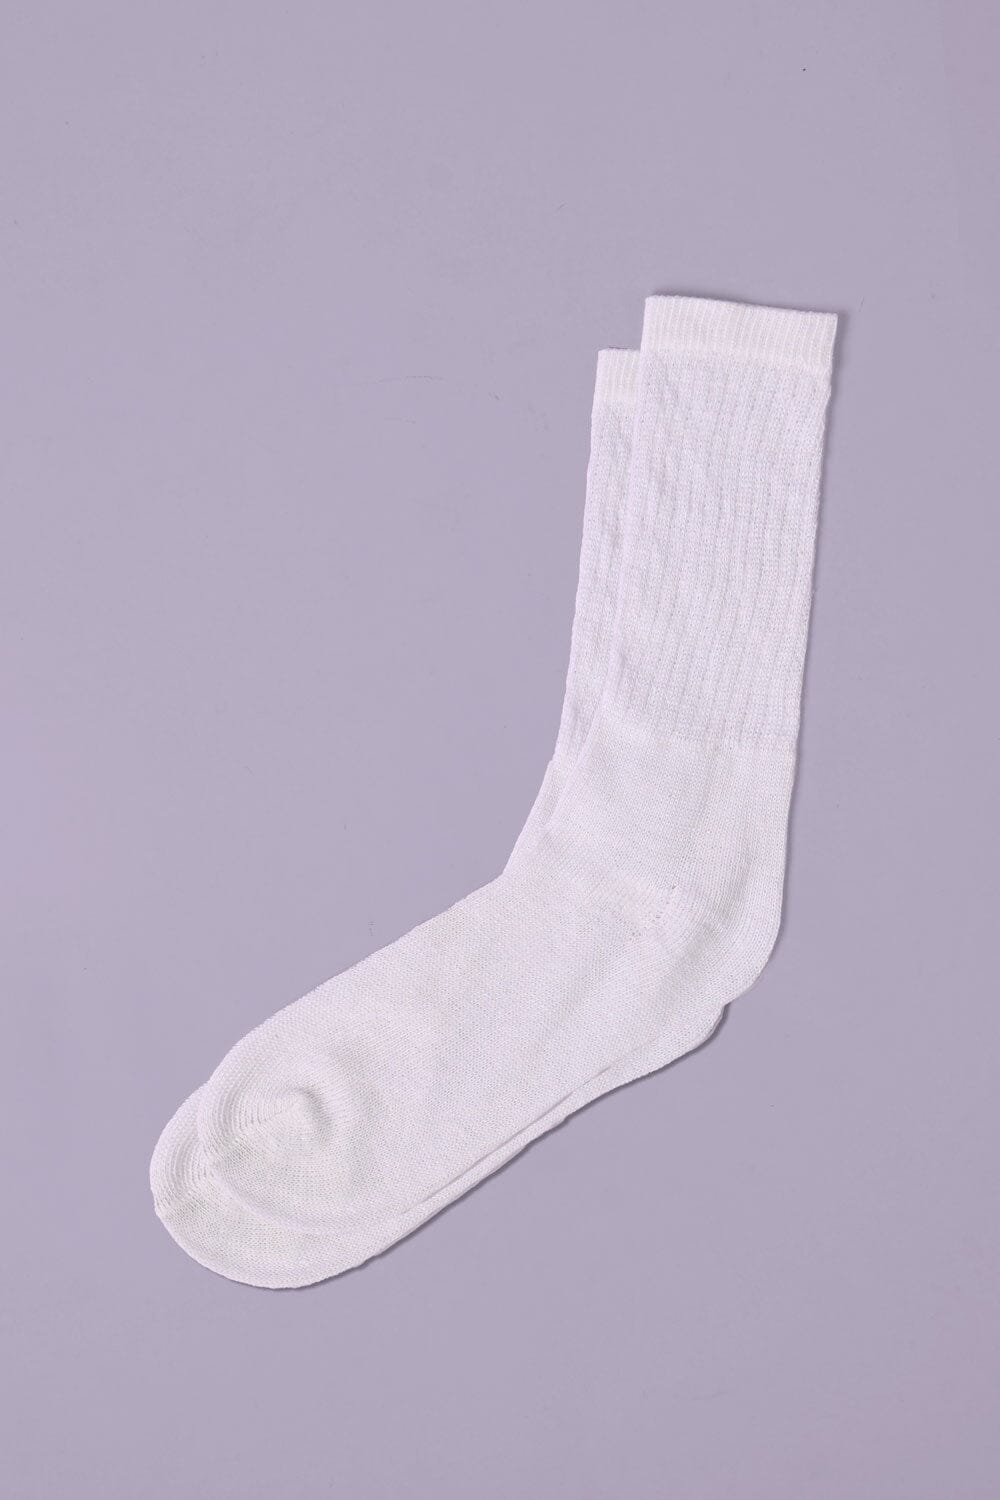 Breathable Comfort Socks for Kids - Special Deal